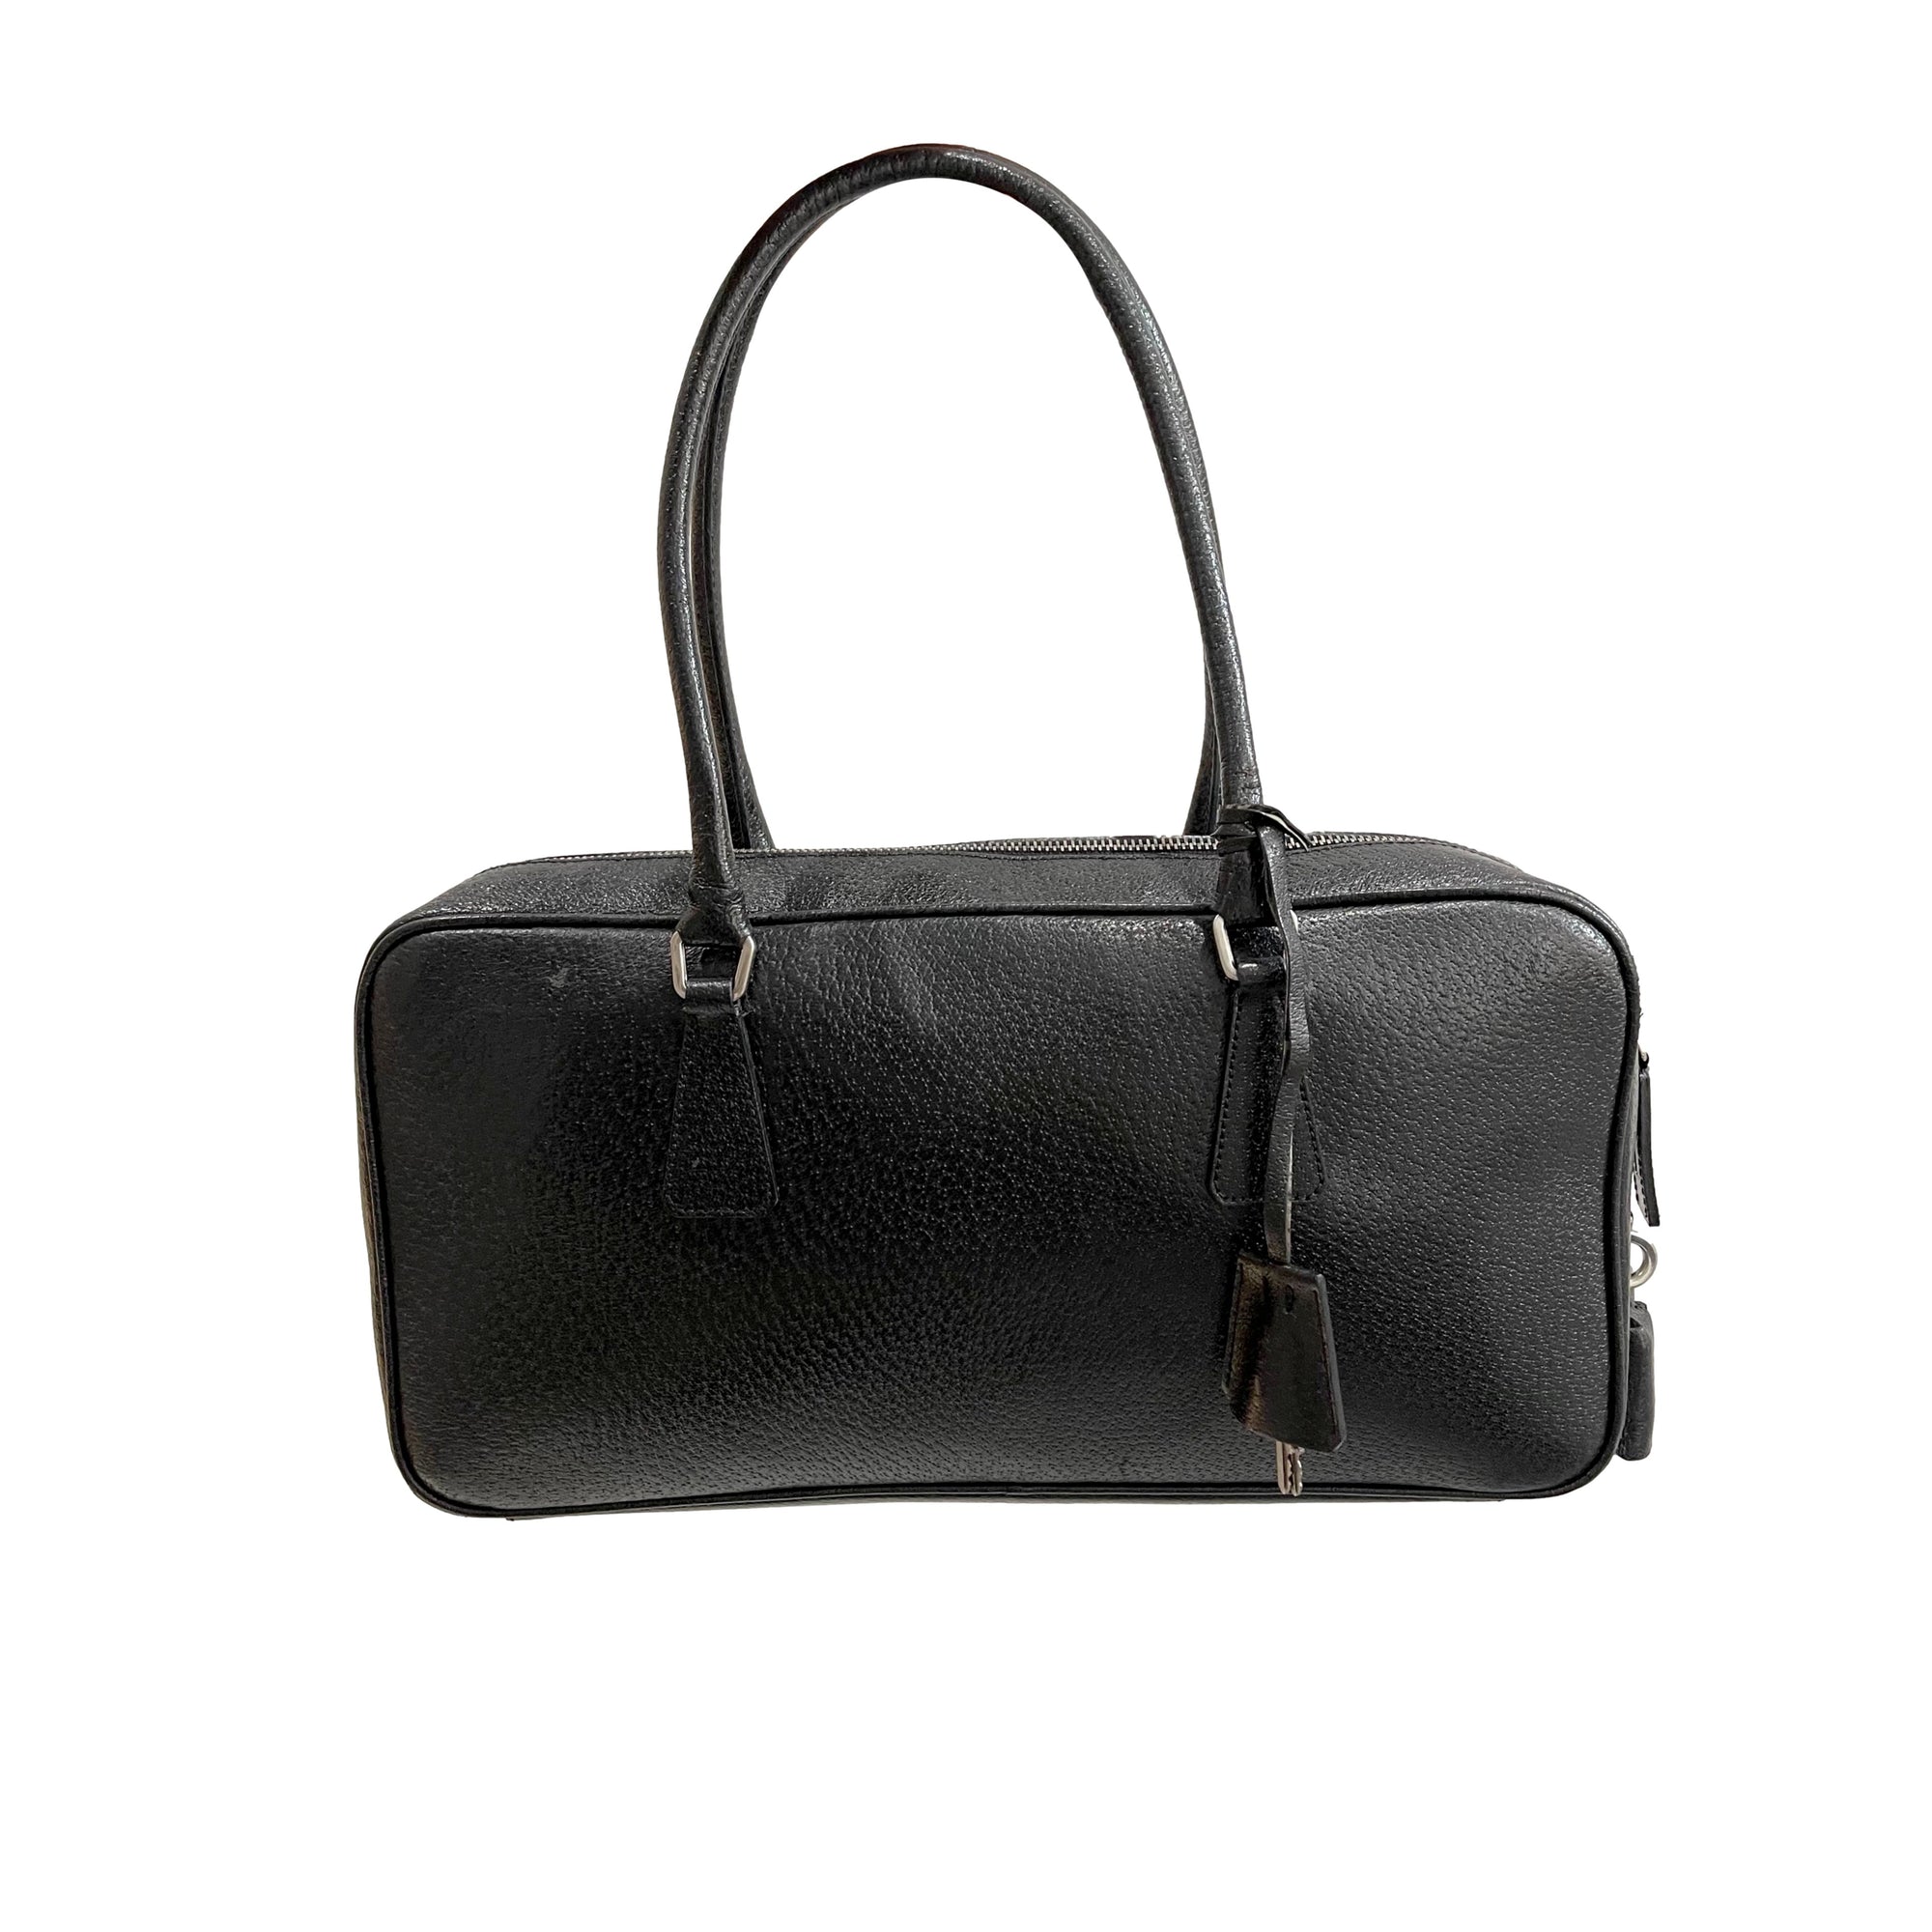 Prada Black Leather Shoulder Bag - Handbags